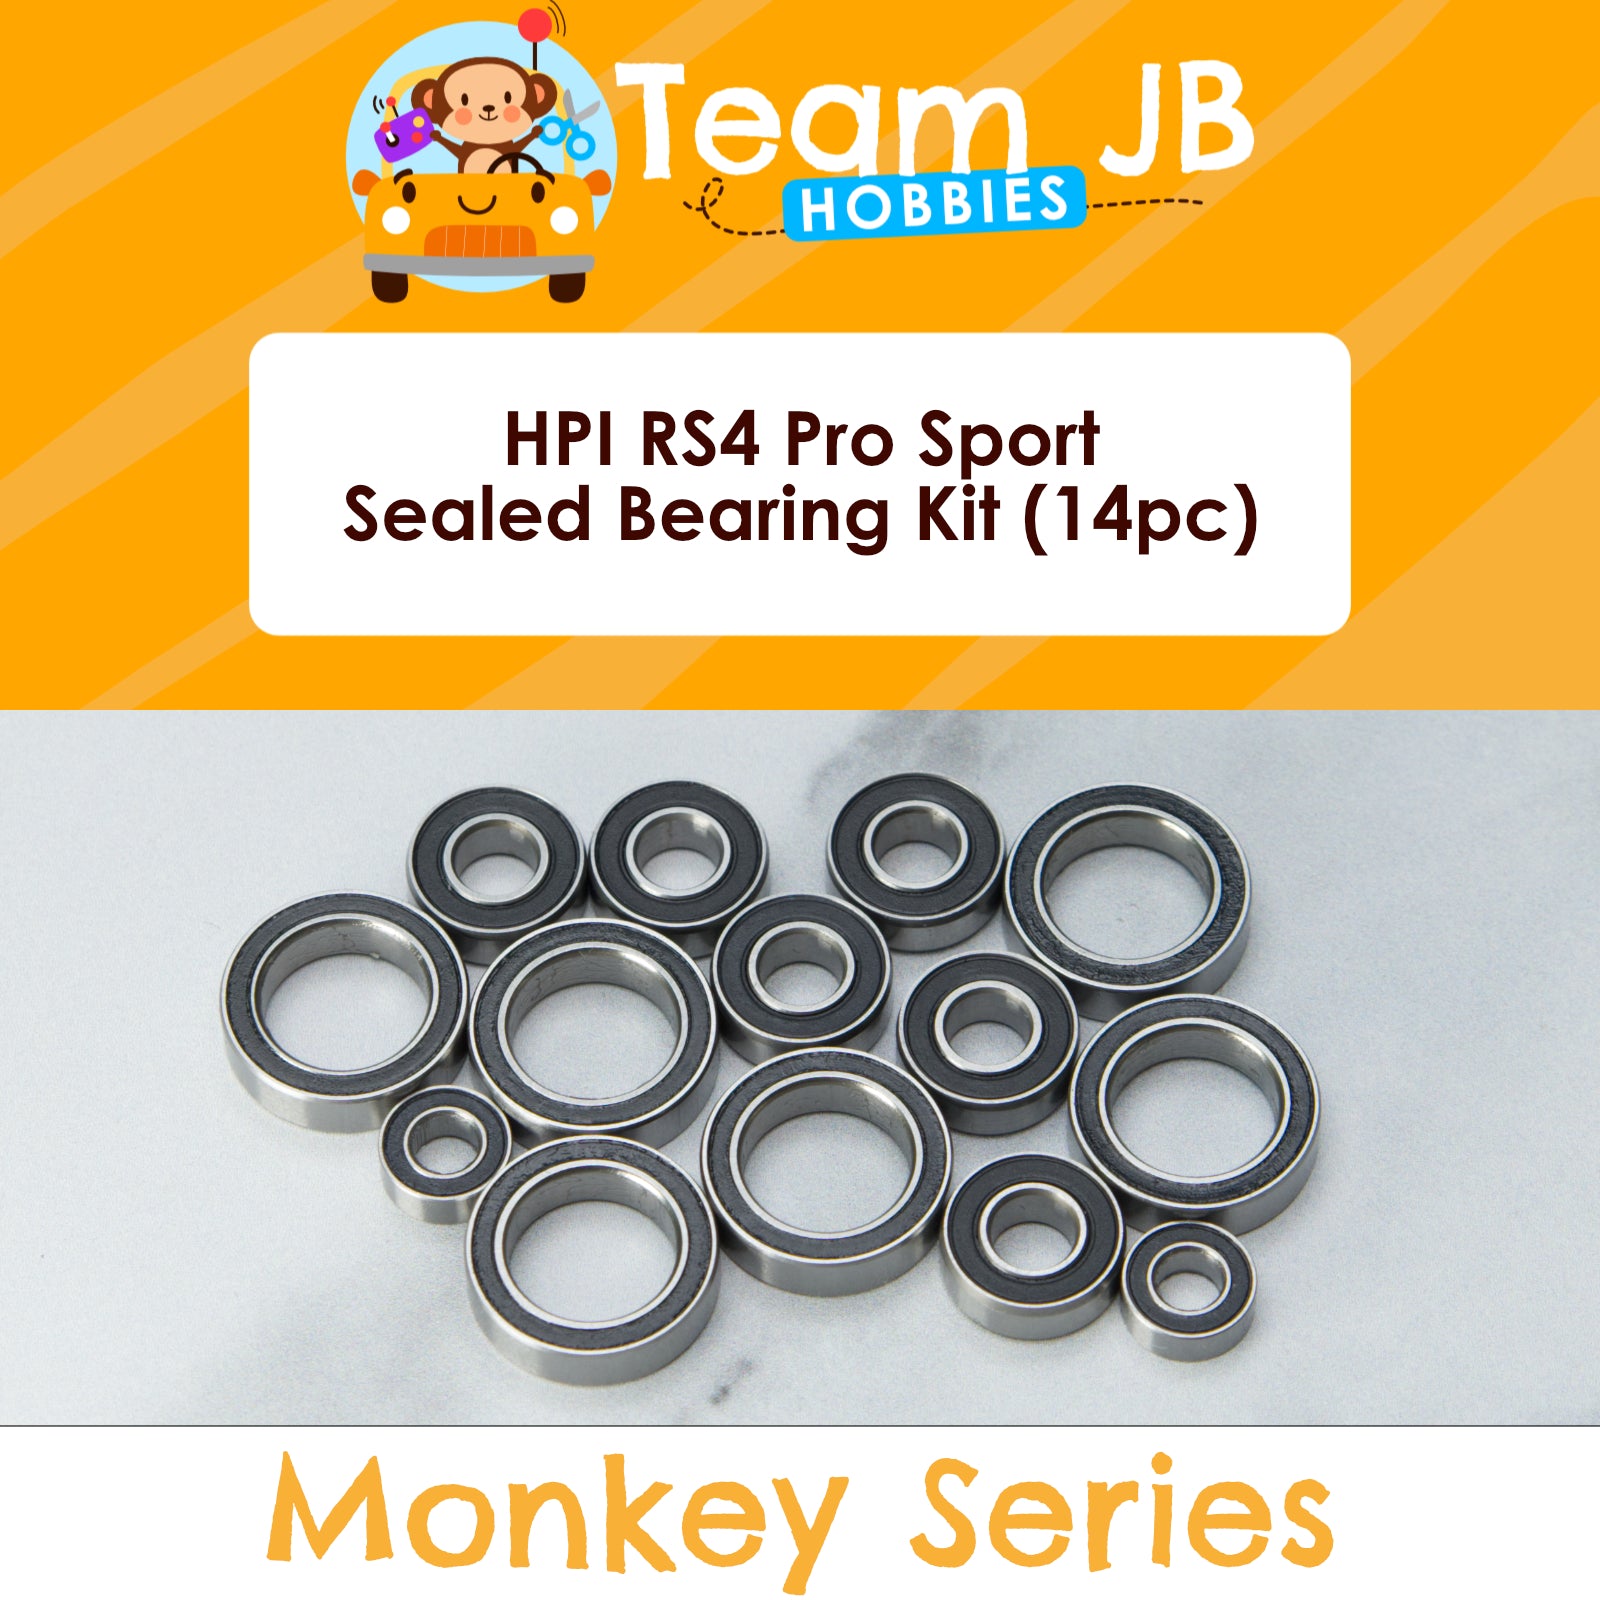 HPI RS4 Pro Sport - Sealed Bearing Kit